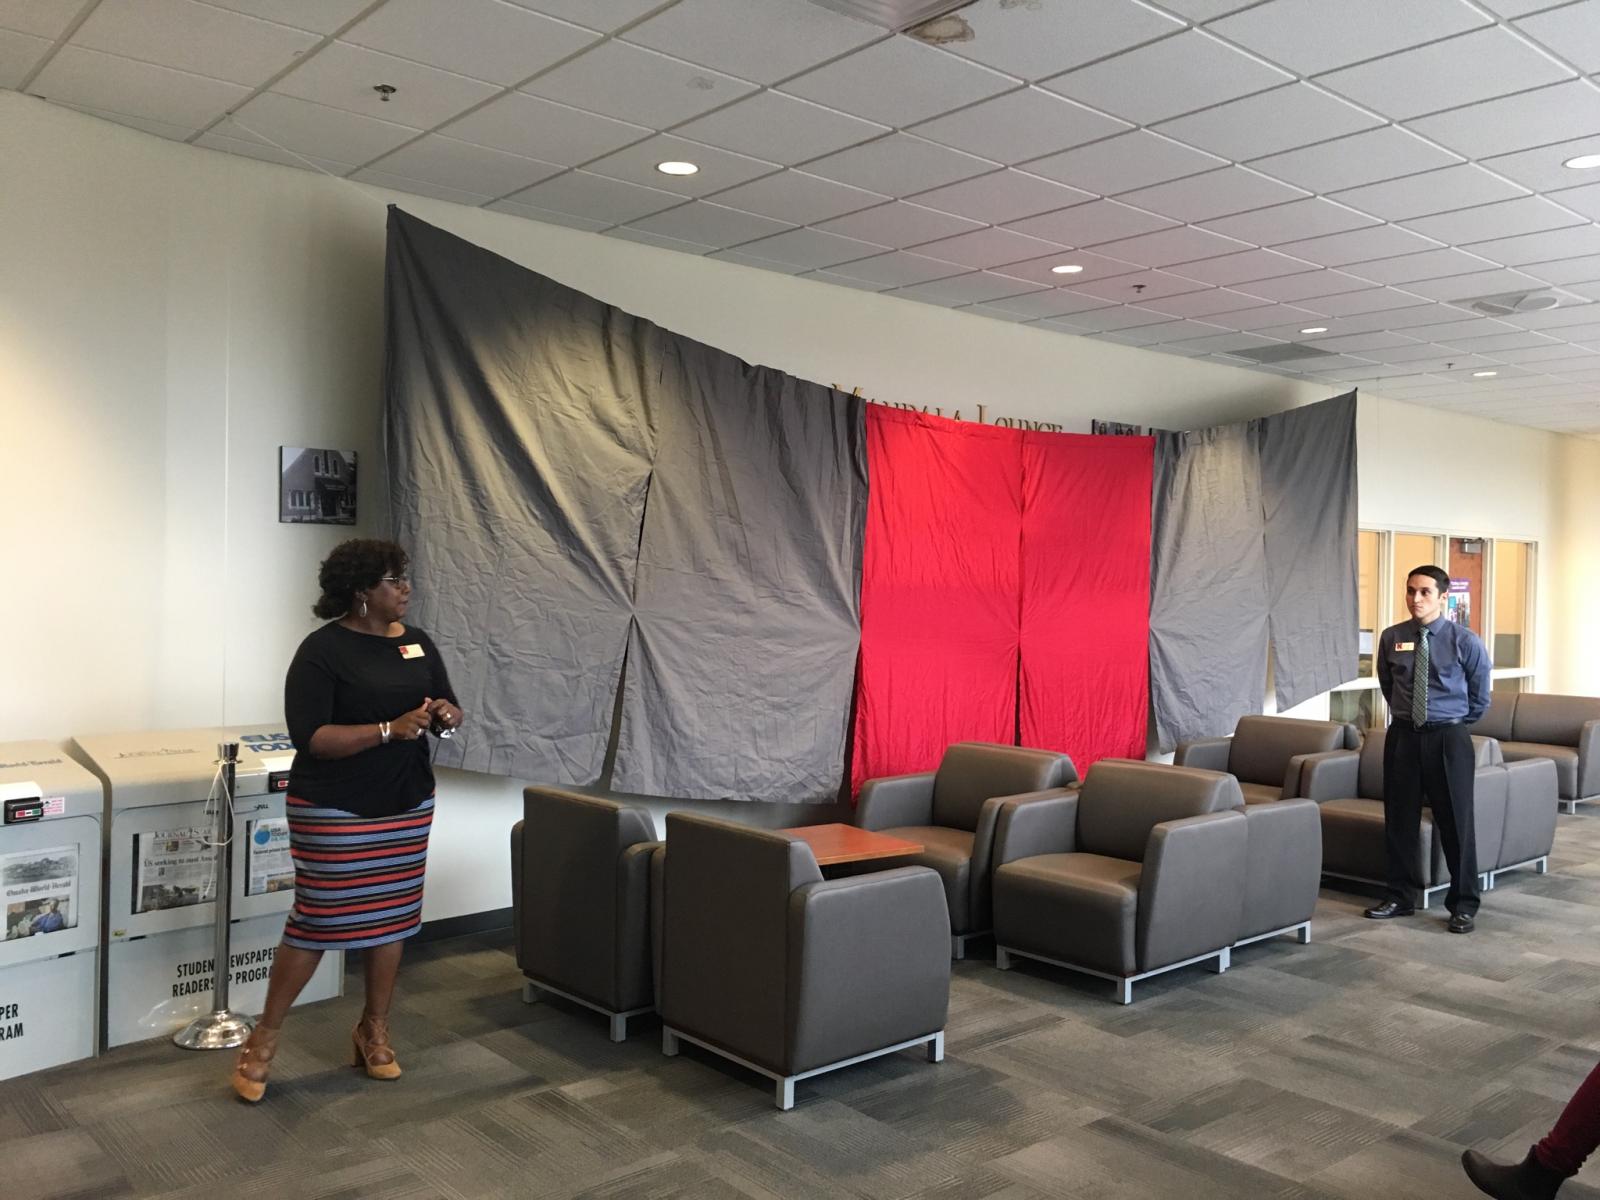 Mandala Lounge artwork covered by sheet at unveiling at the University of Nebraska